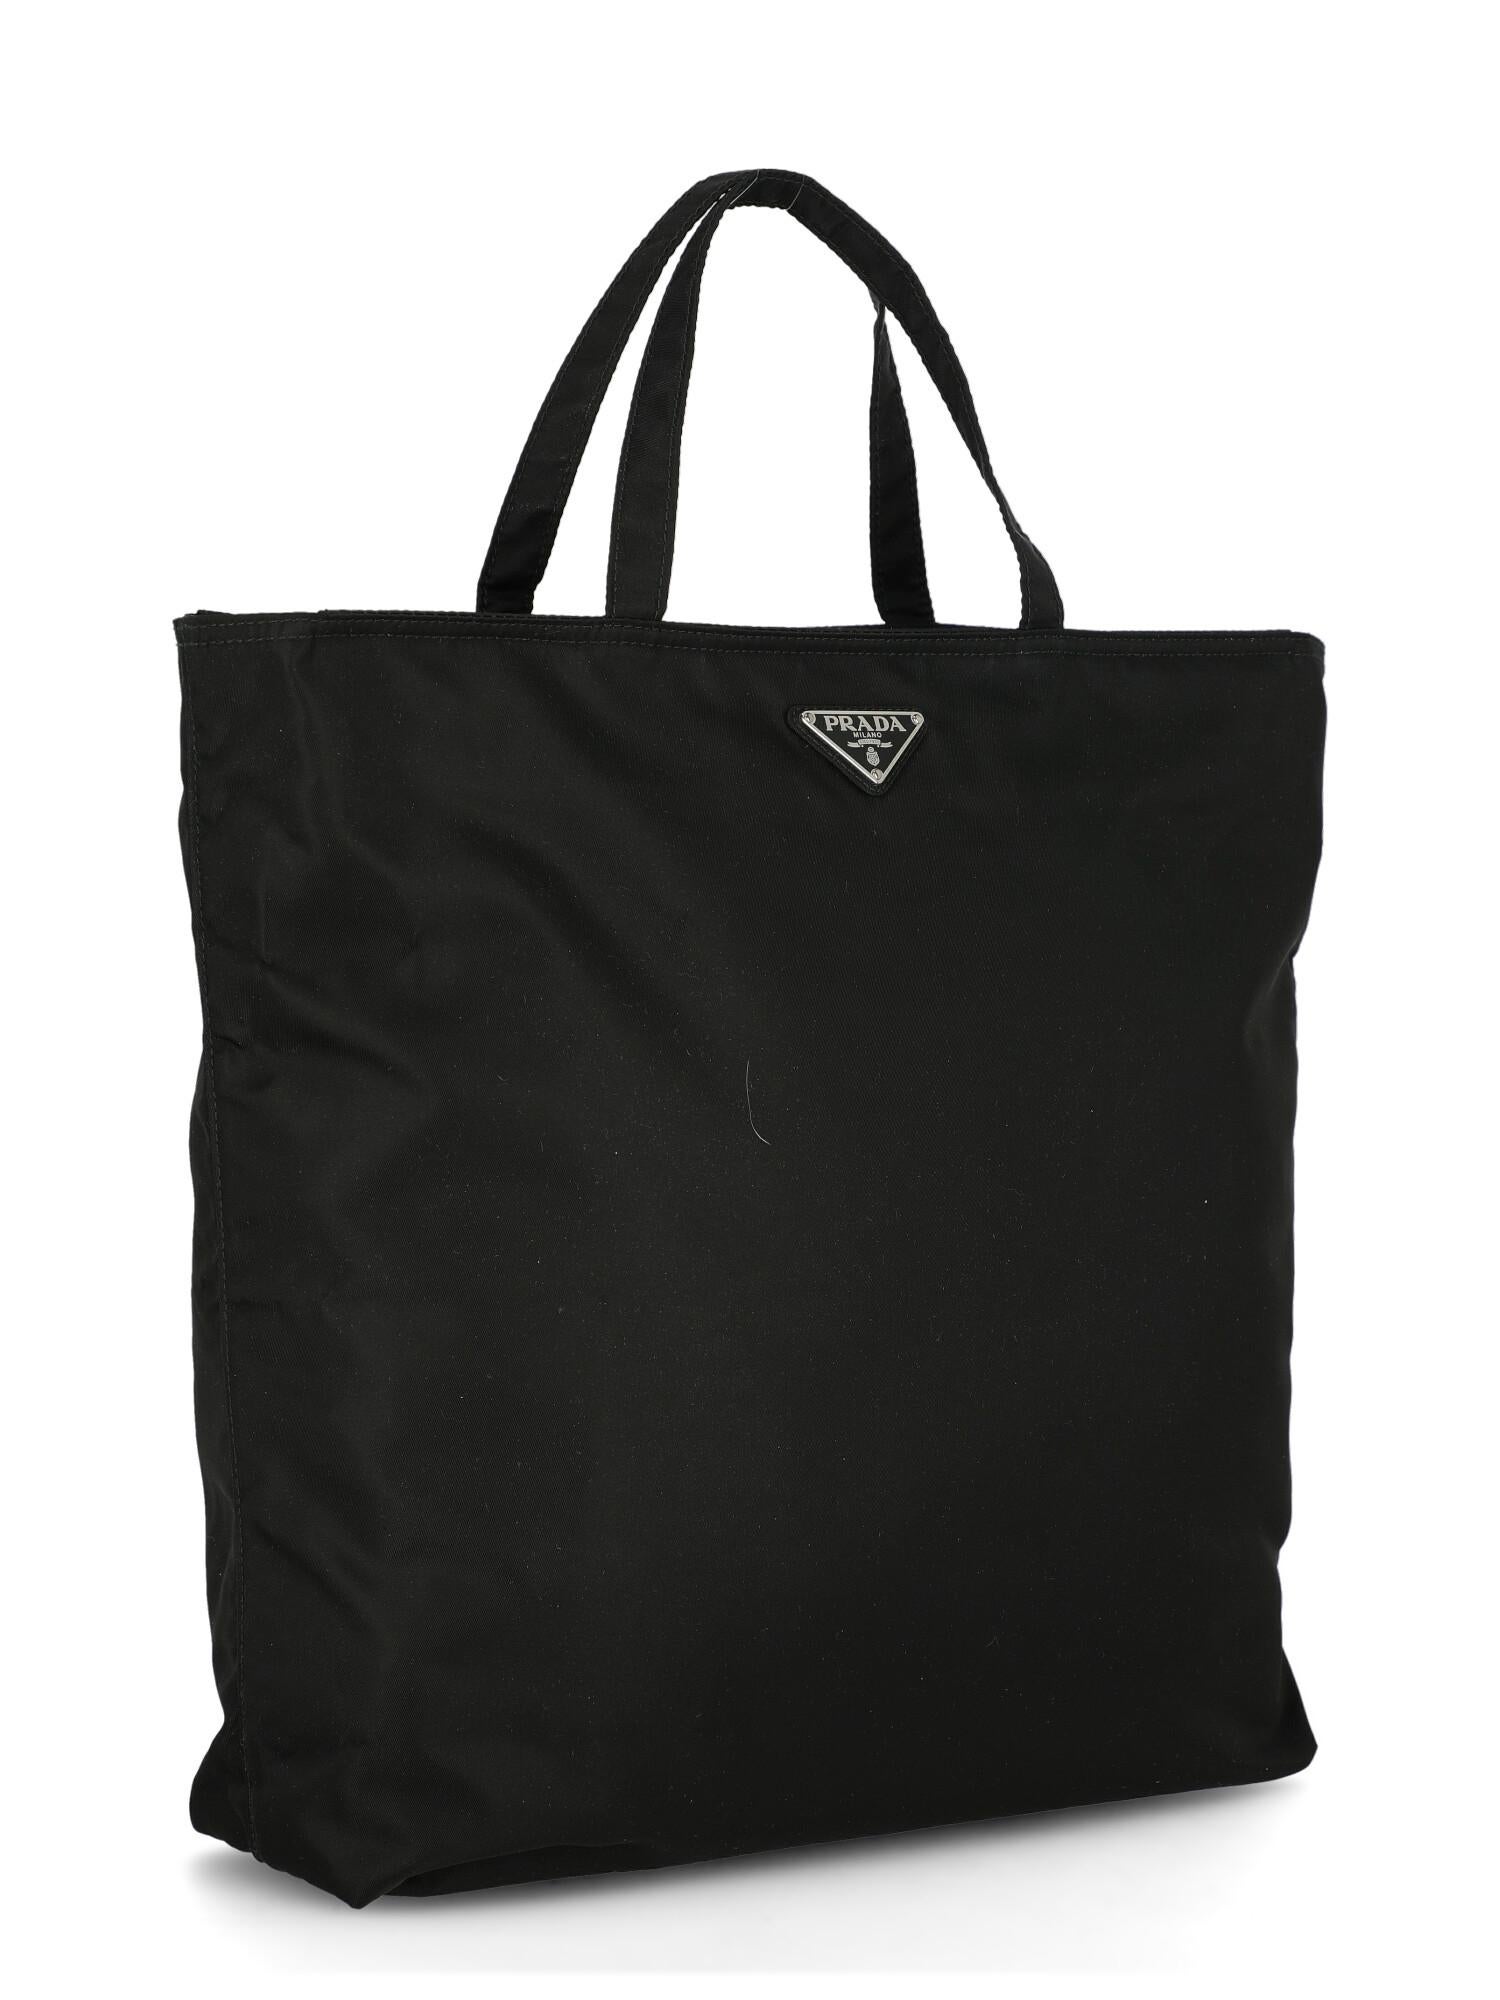 Prada Woman Handbag  Black Synthetic Fibers In Excellent Condition For Sale In Milan, IT